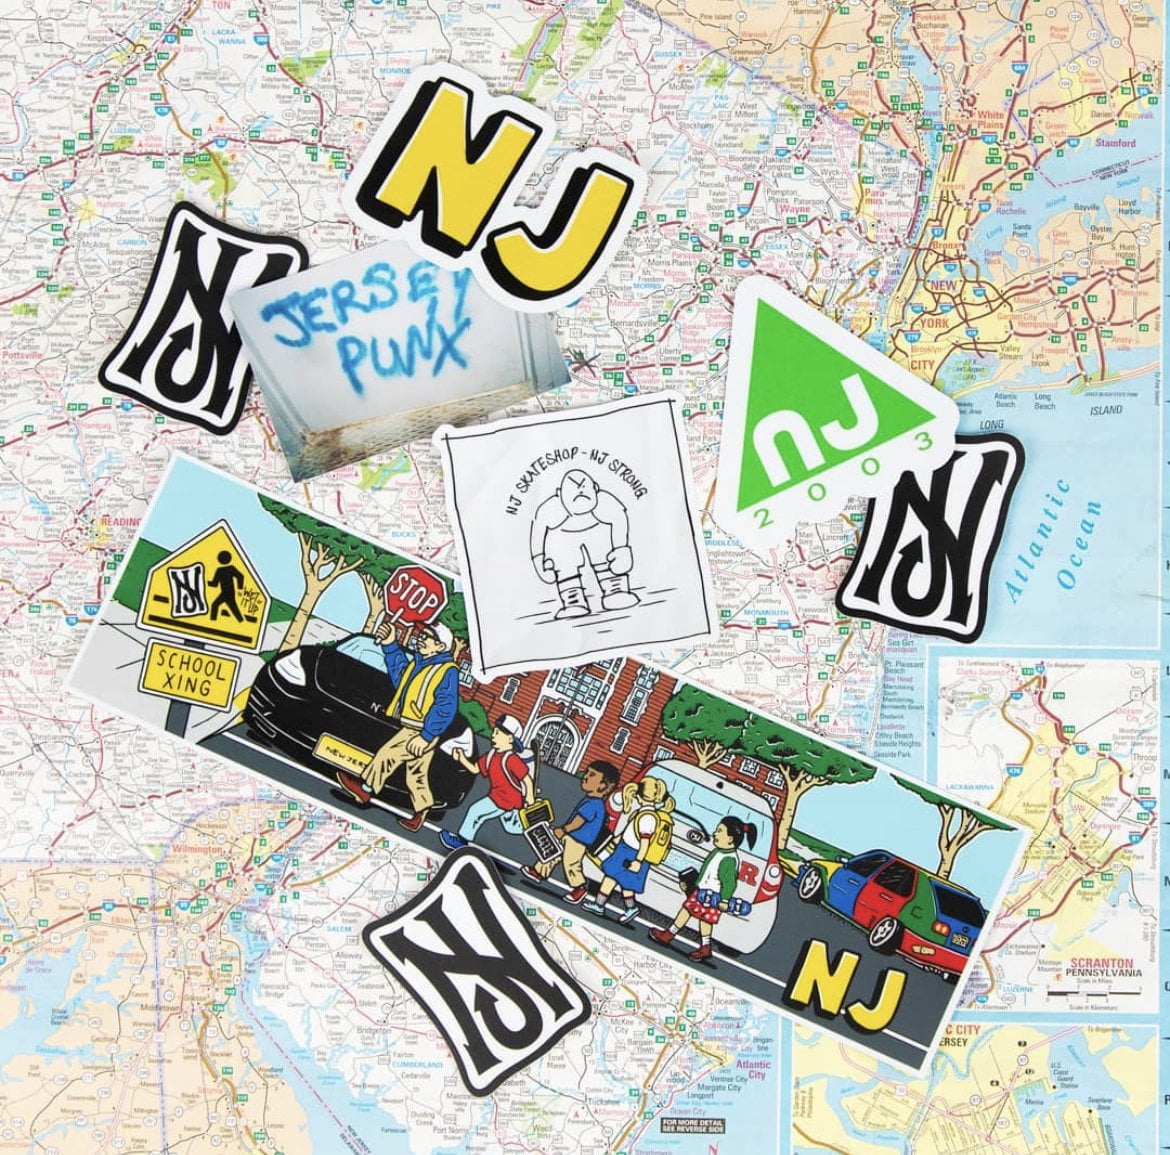 Mutliple skate sticker decals on a map